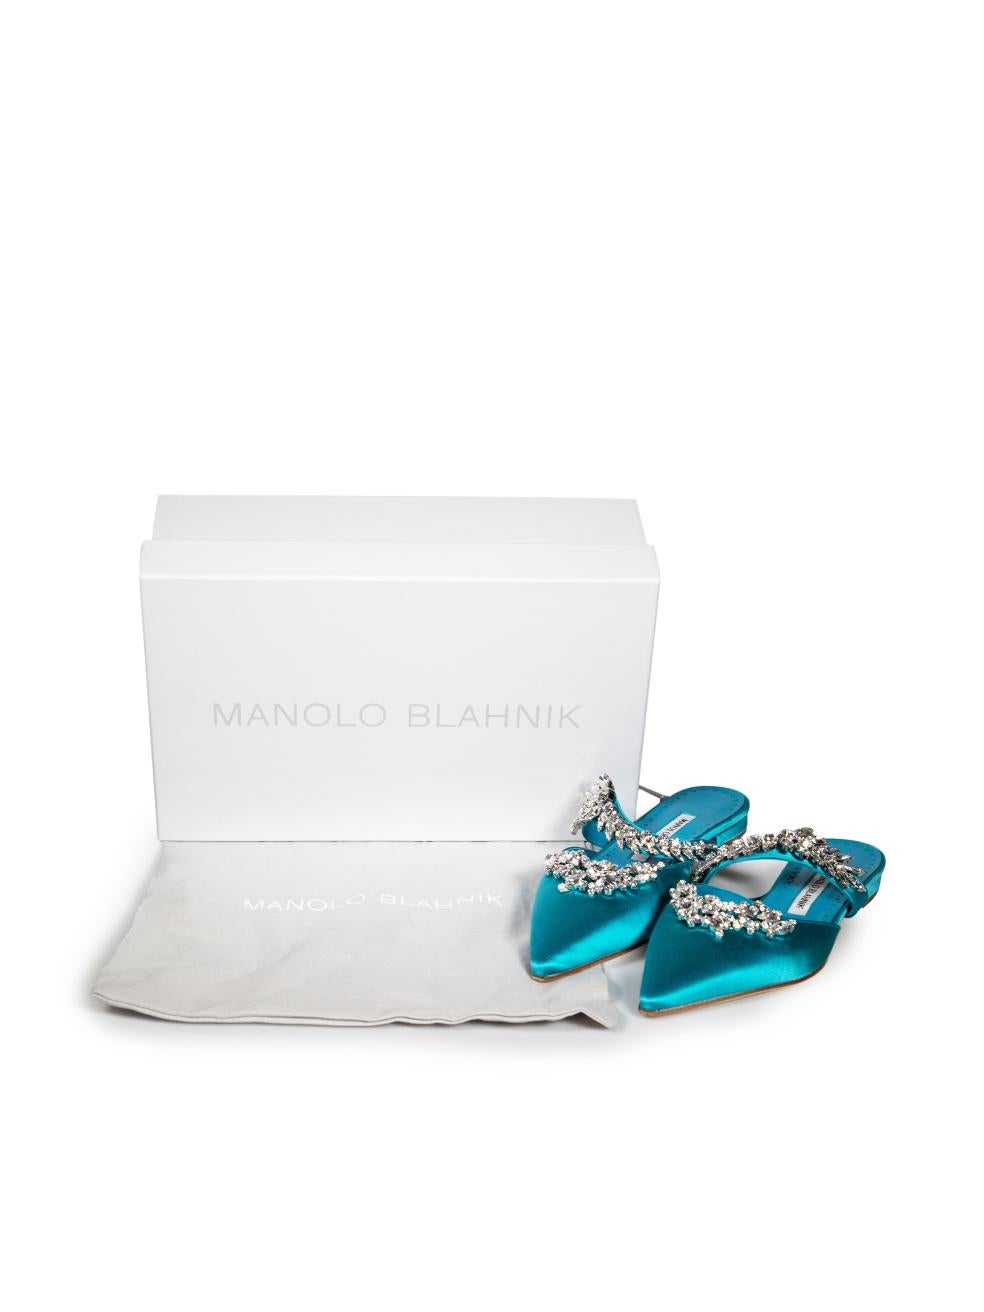 Manolo Blahnik Turquoise Embellished Lurum Mules Size IT 36.5 For Sale 1